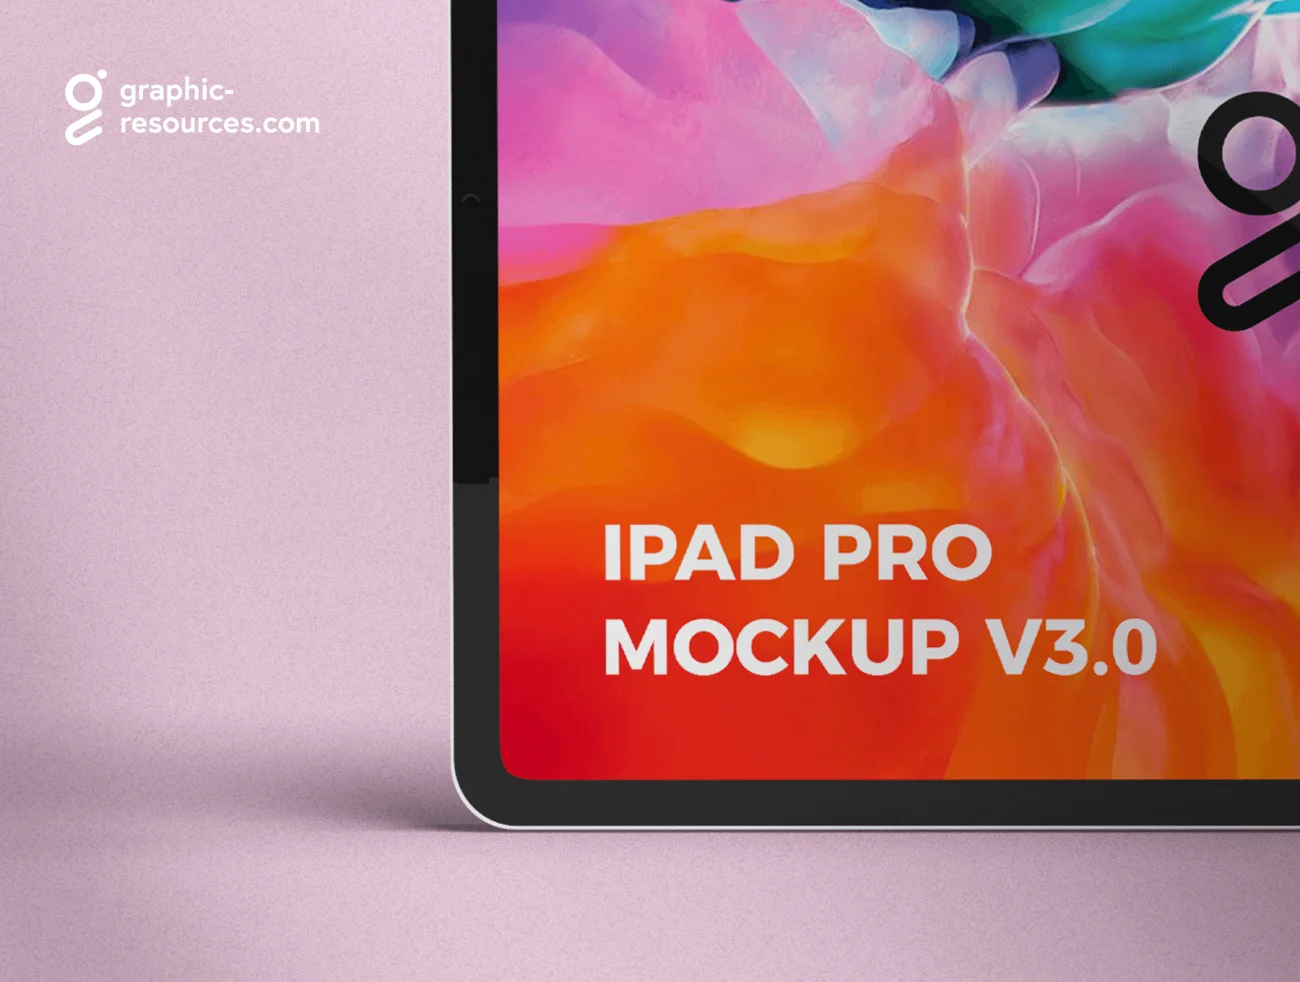 iPad Pro分层智能样机 iPad Pro Mockup Scenes-产品展示、优雅样机、创意展示、实景样机、样机、苹果设备-到位啦UI